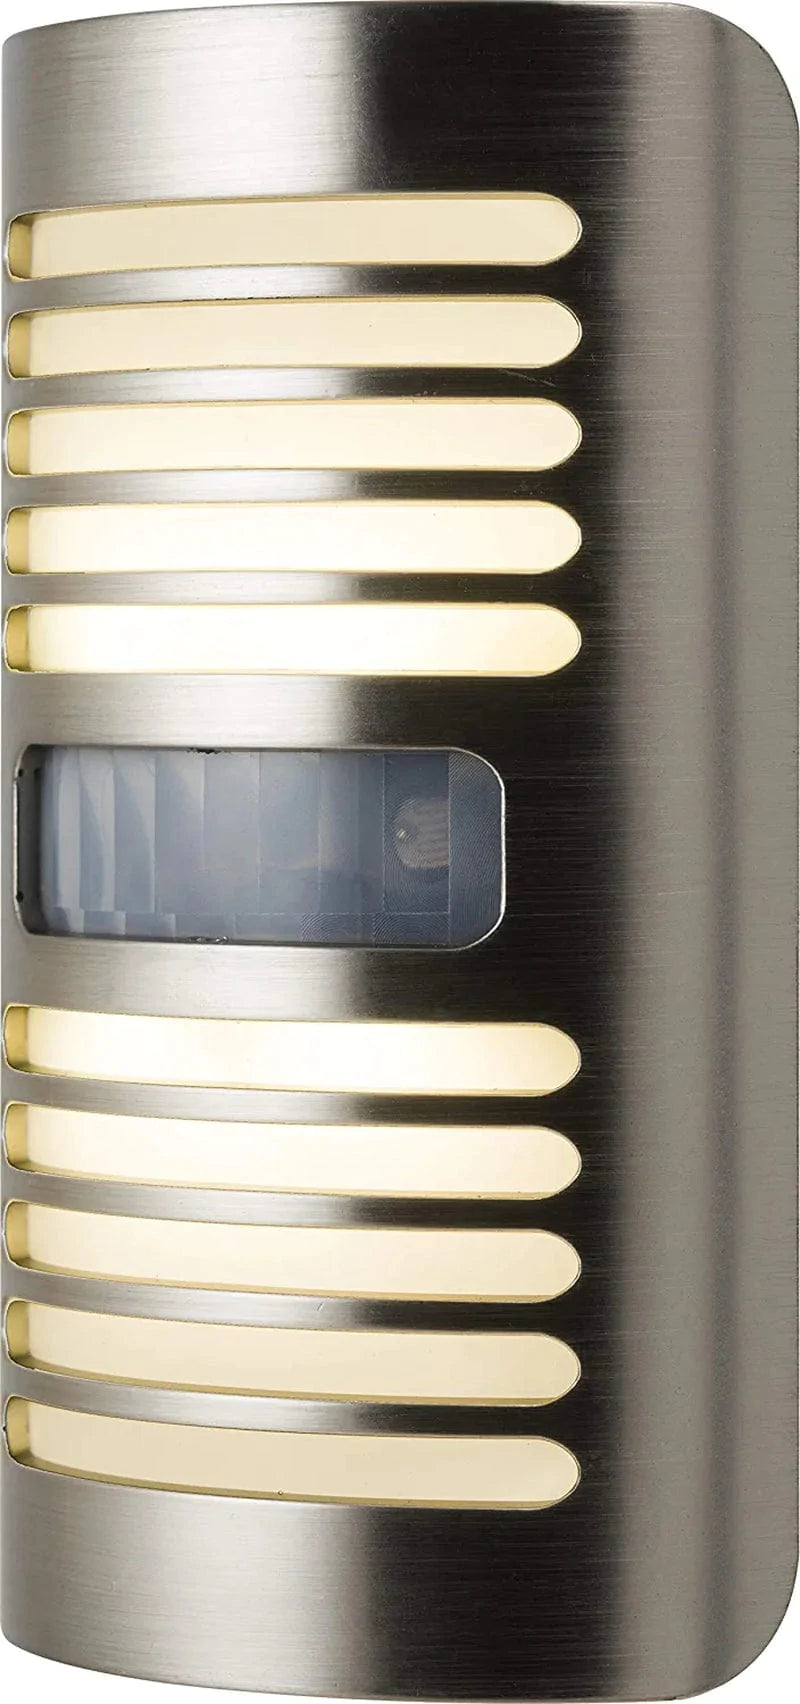 GE Enbrighten LED Motion Sensor Night Light, Motion-Select 25Ft Detection, Plug-In, 40 Lumens, Dusk-To-Dawn, Ideal Nightlight for Bedroom, Bathroom, 37299, Brushed Nickel Louver, 1 Pack